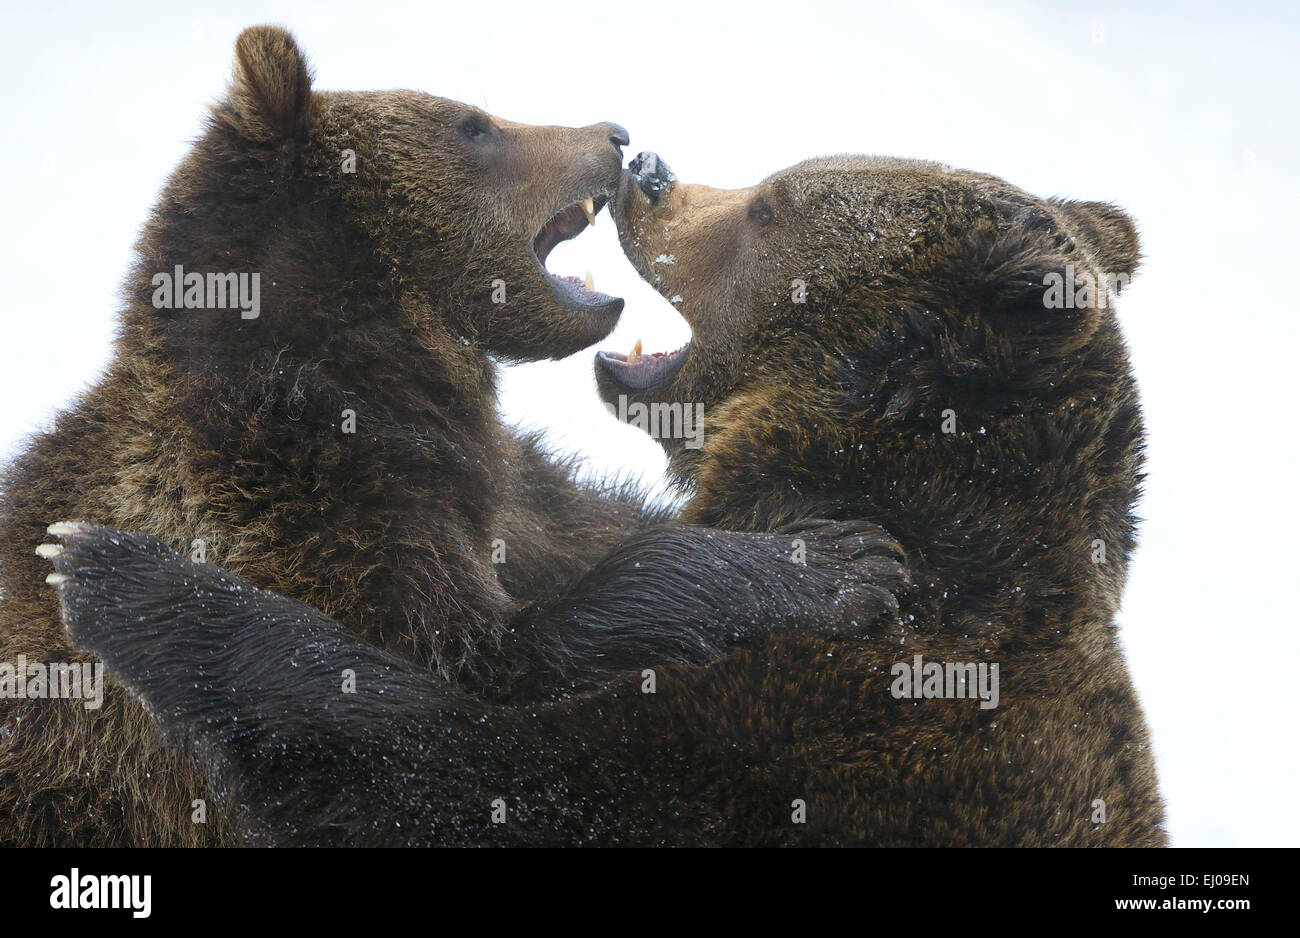 Brown bear, animal, Germany, Europe, European bear, European brown bears, predator, Ursus arctos, bear, bears, brown bear, predat Stock Photo